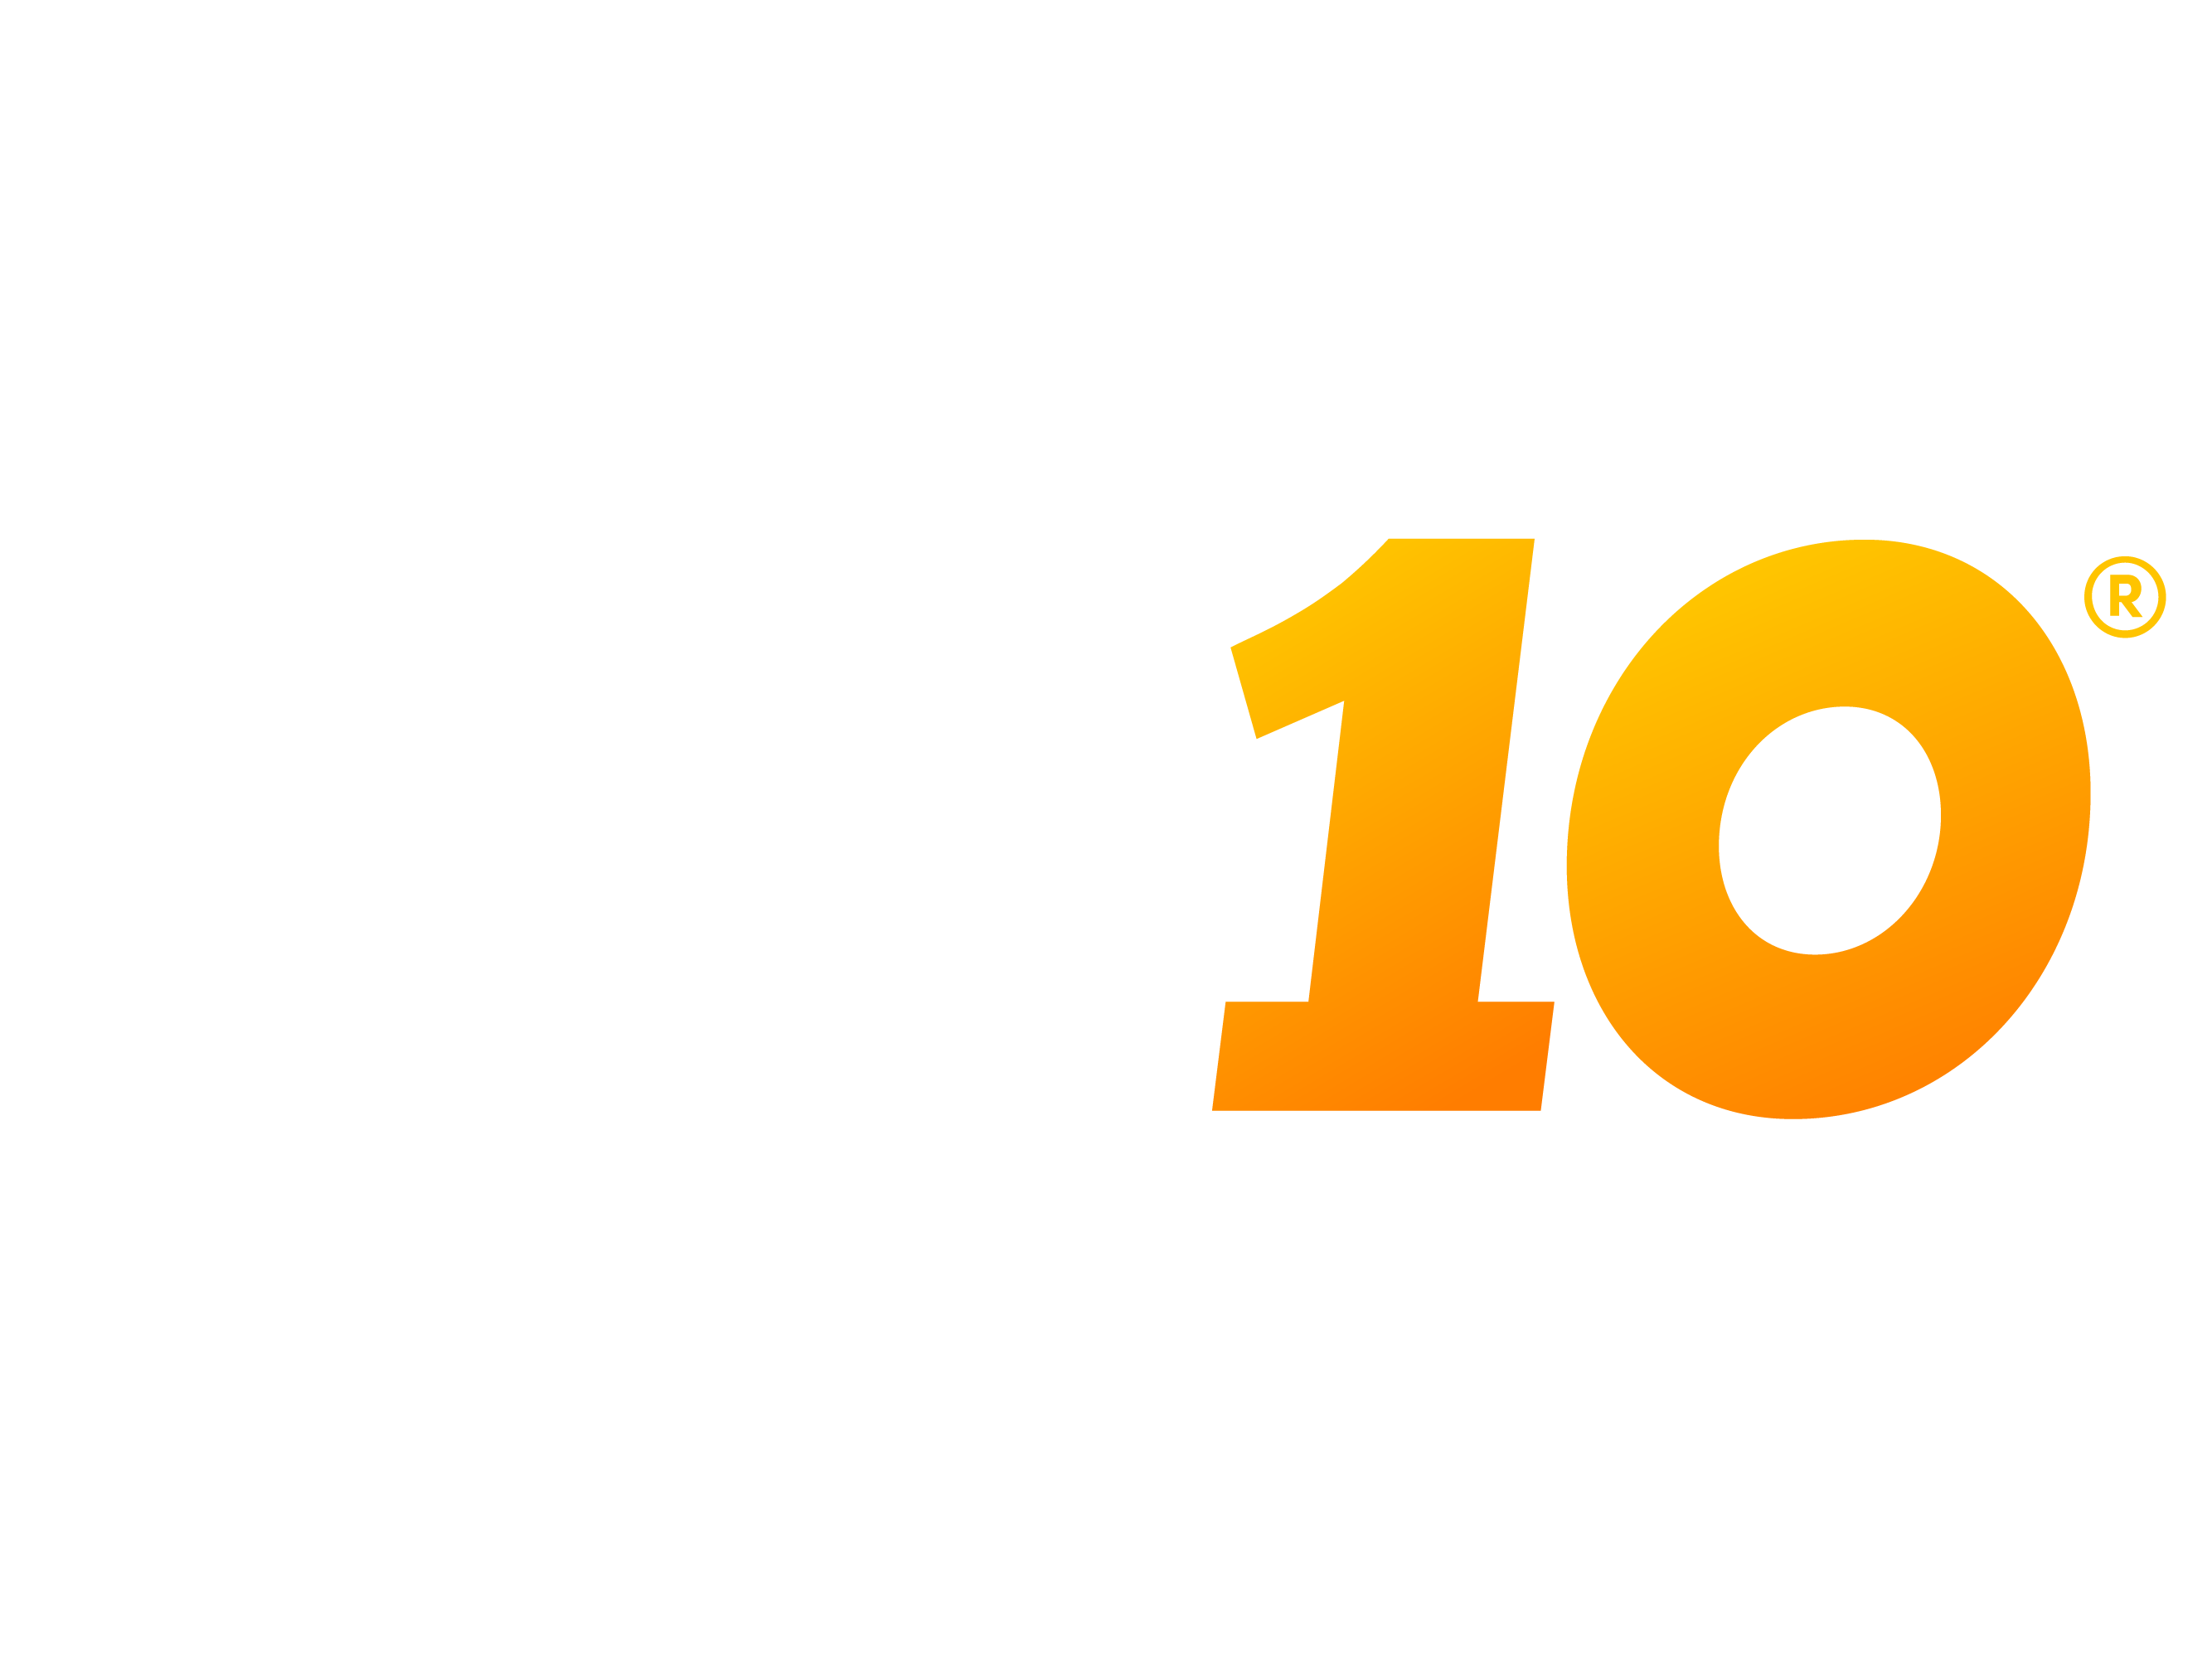 Jet10